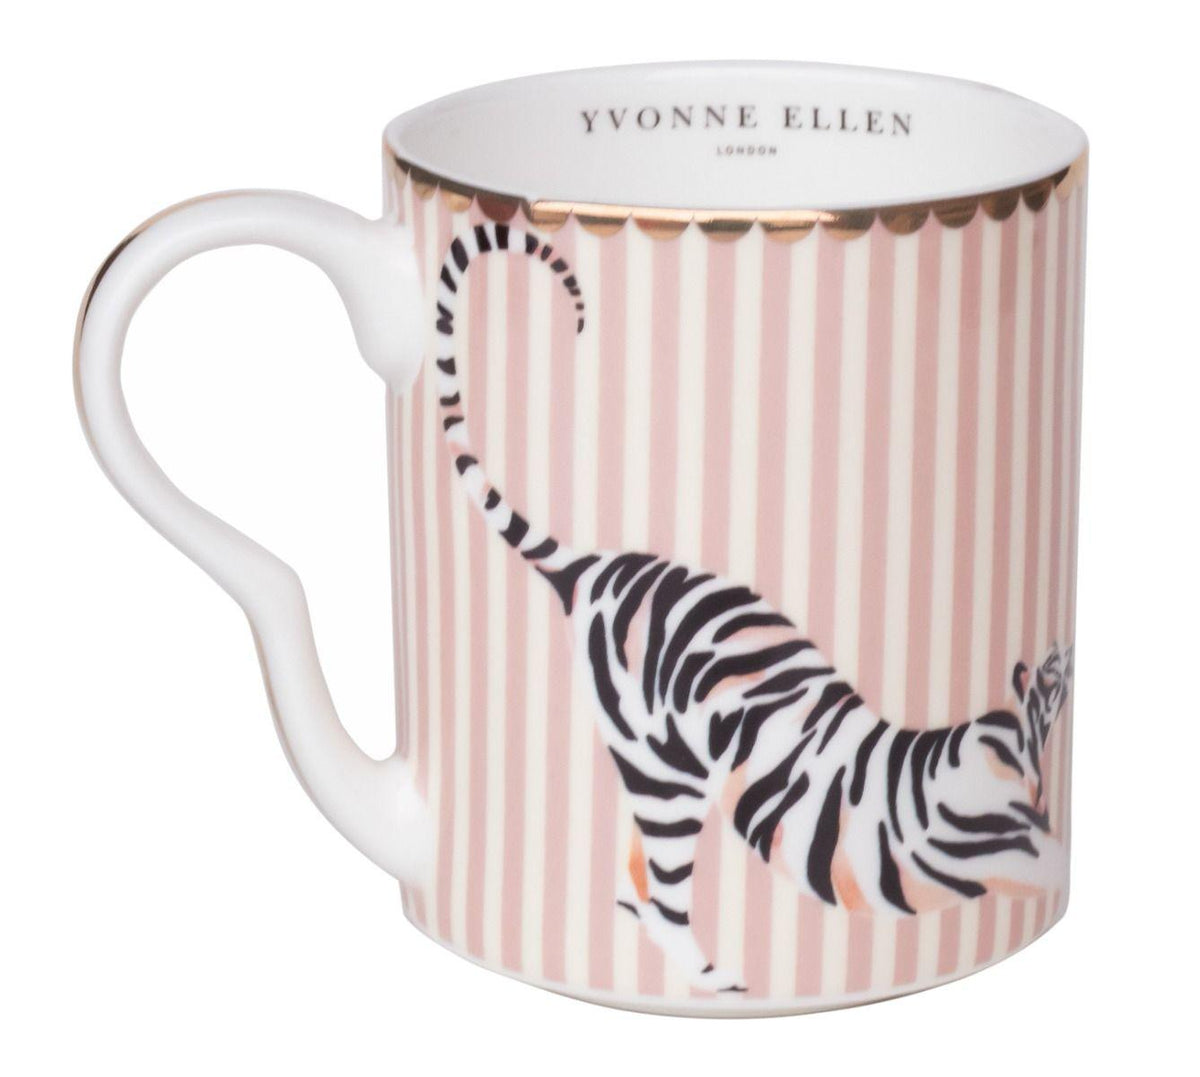 Yvonne Ellen Tiger Small Mug Tableware Foxyavenue UK